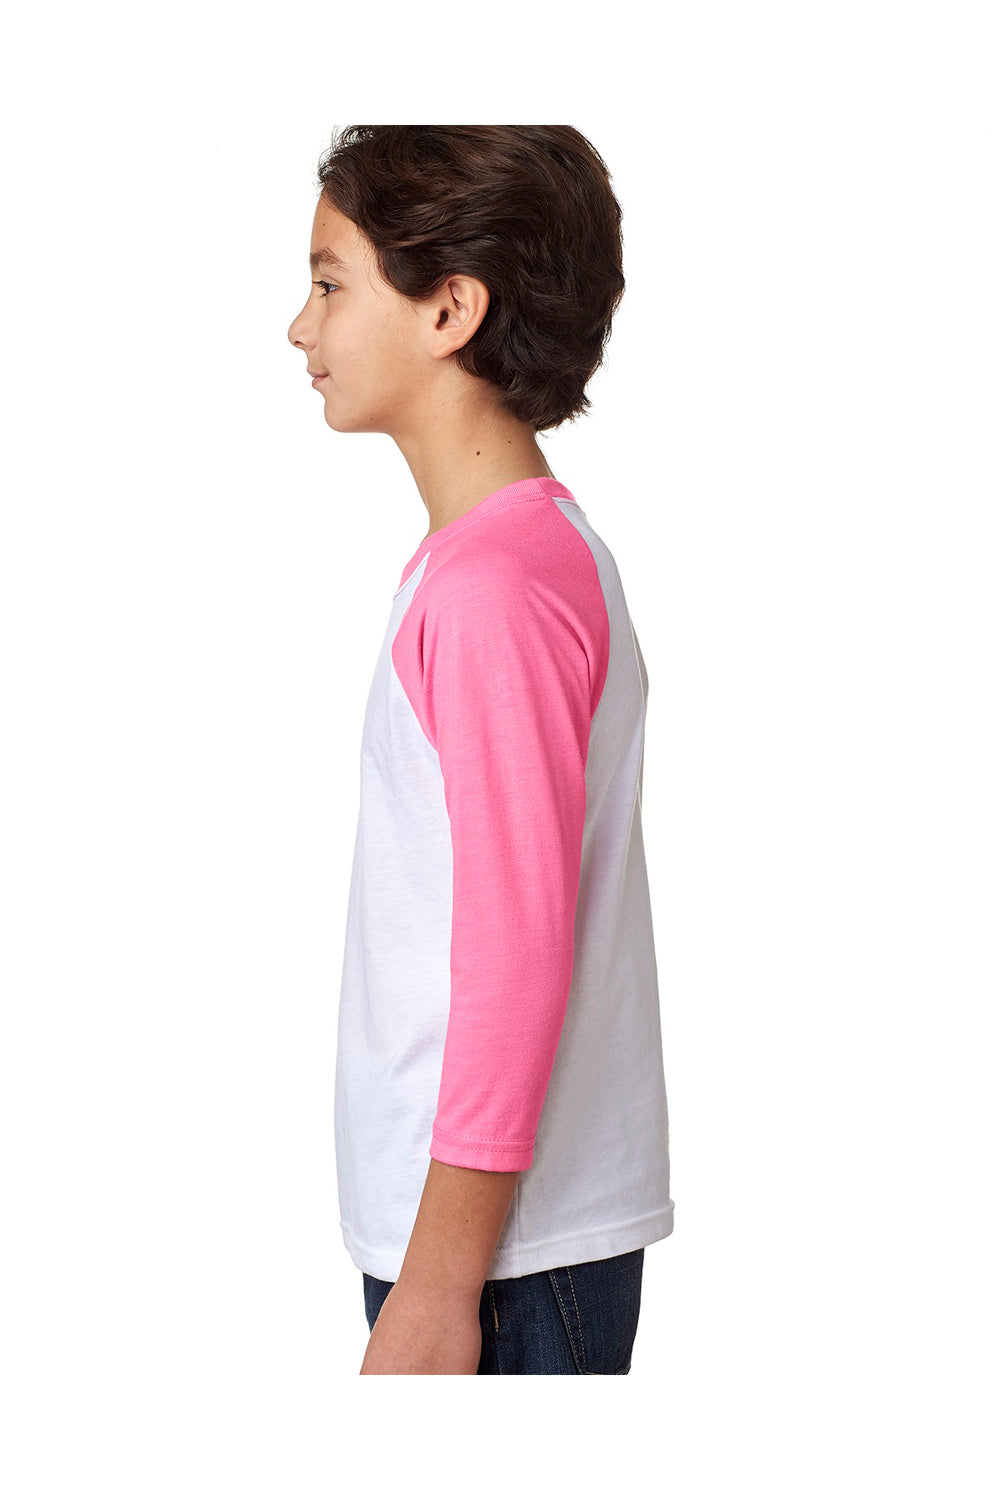 Next Level 3352 Youth CVC Jersey 3/4 Sleeve Crewneck T-Shirt White/Hot Pink Side